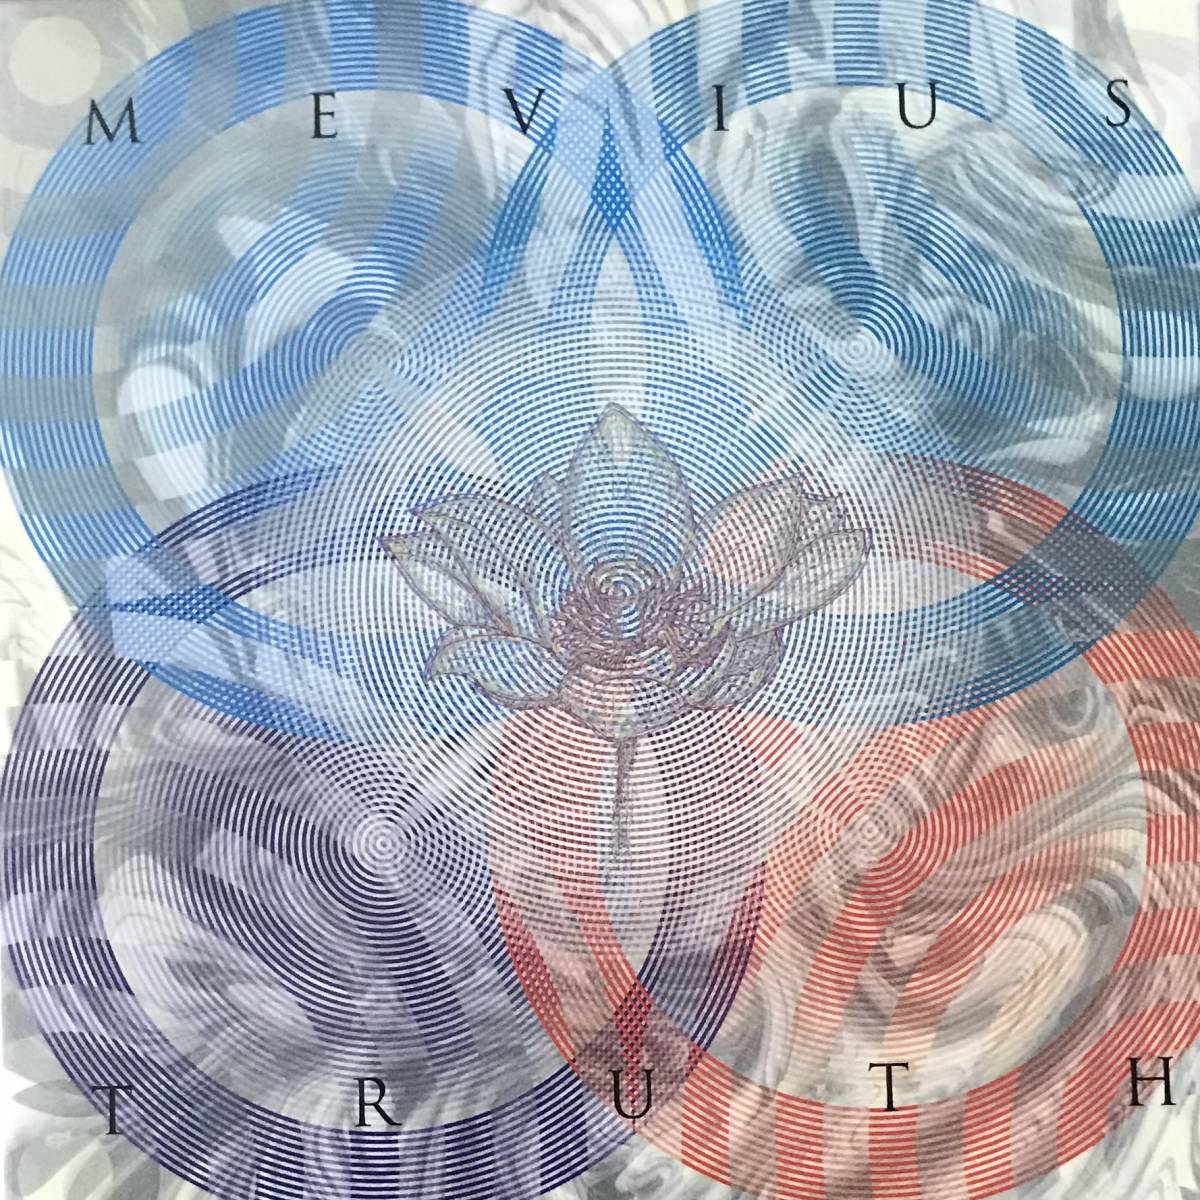 [ CD ] Mevius / Truth ( Techno / Experimental ) Sunset Label 新潟在住 ビートメーカー 不規則キック テクノ アンビエント_画像1